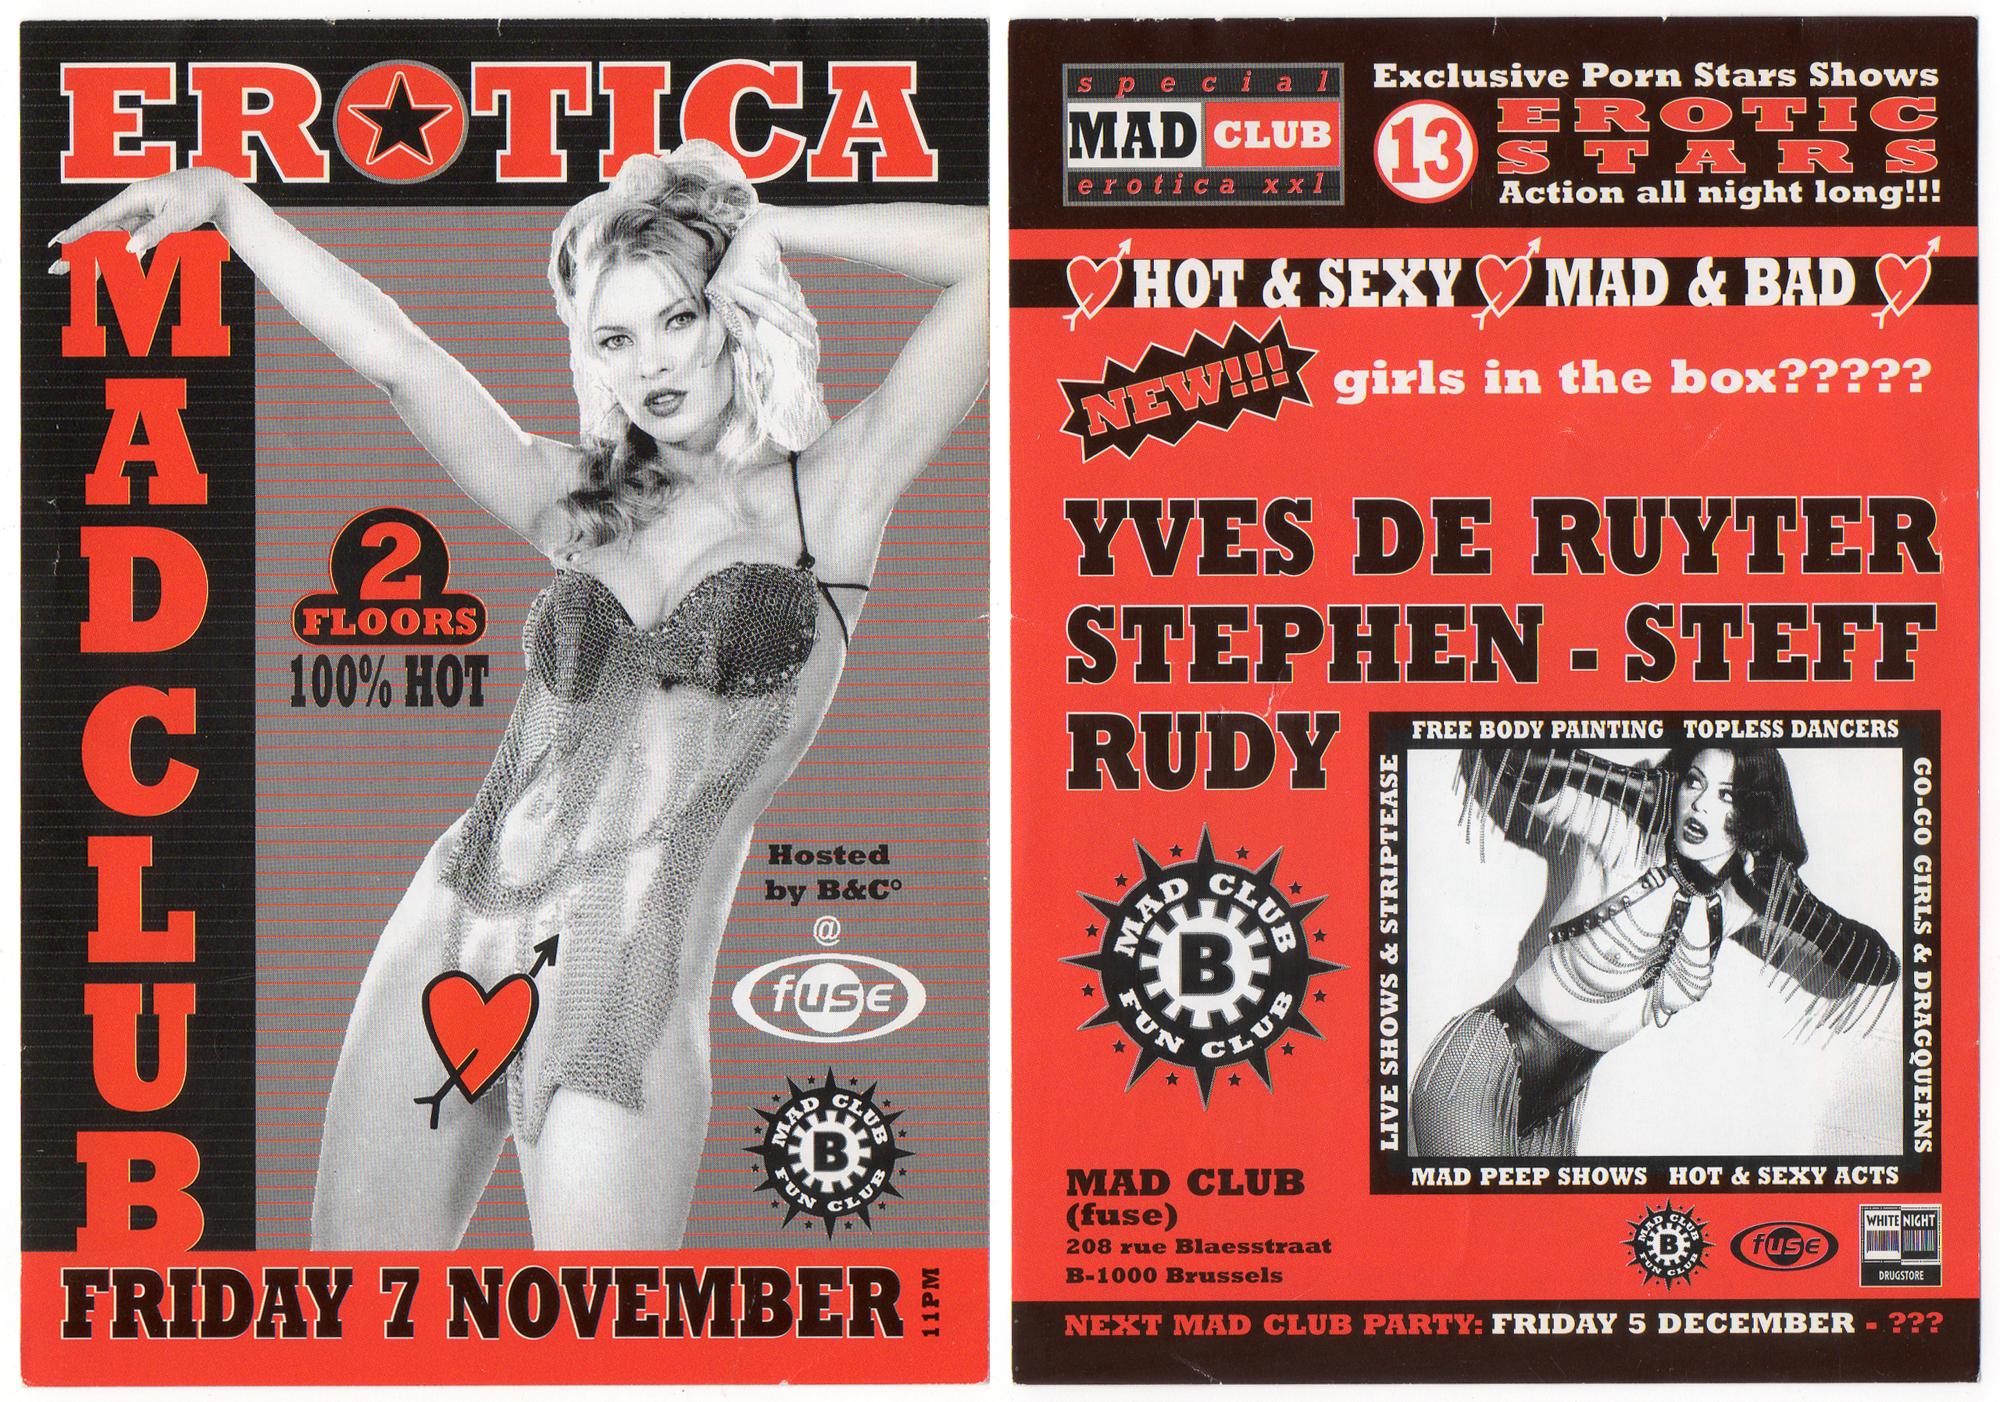 Brussels (2001-2007) - Mad Club Erotica